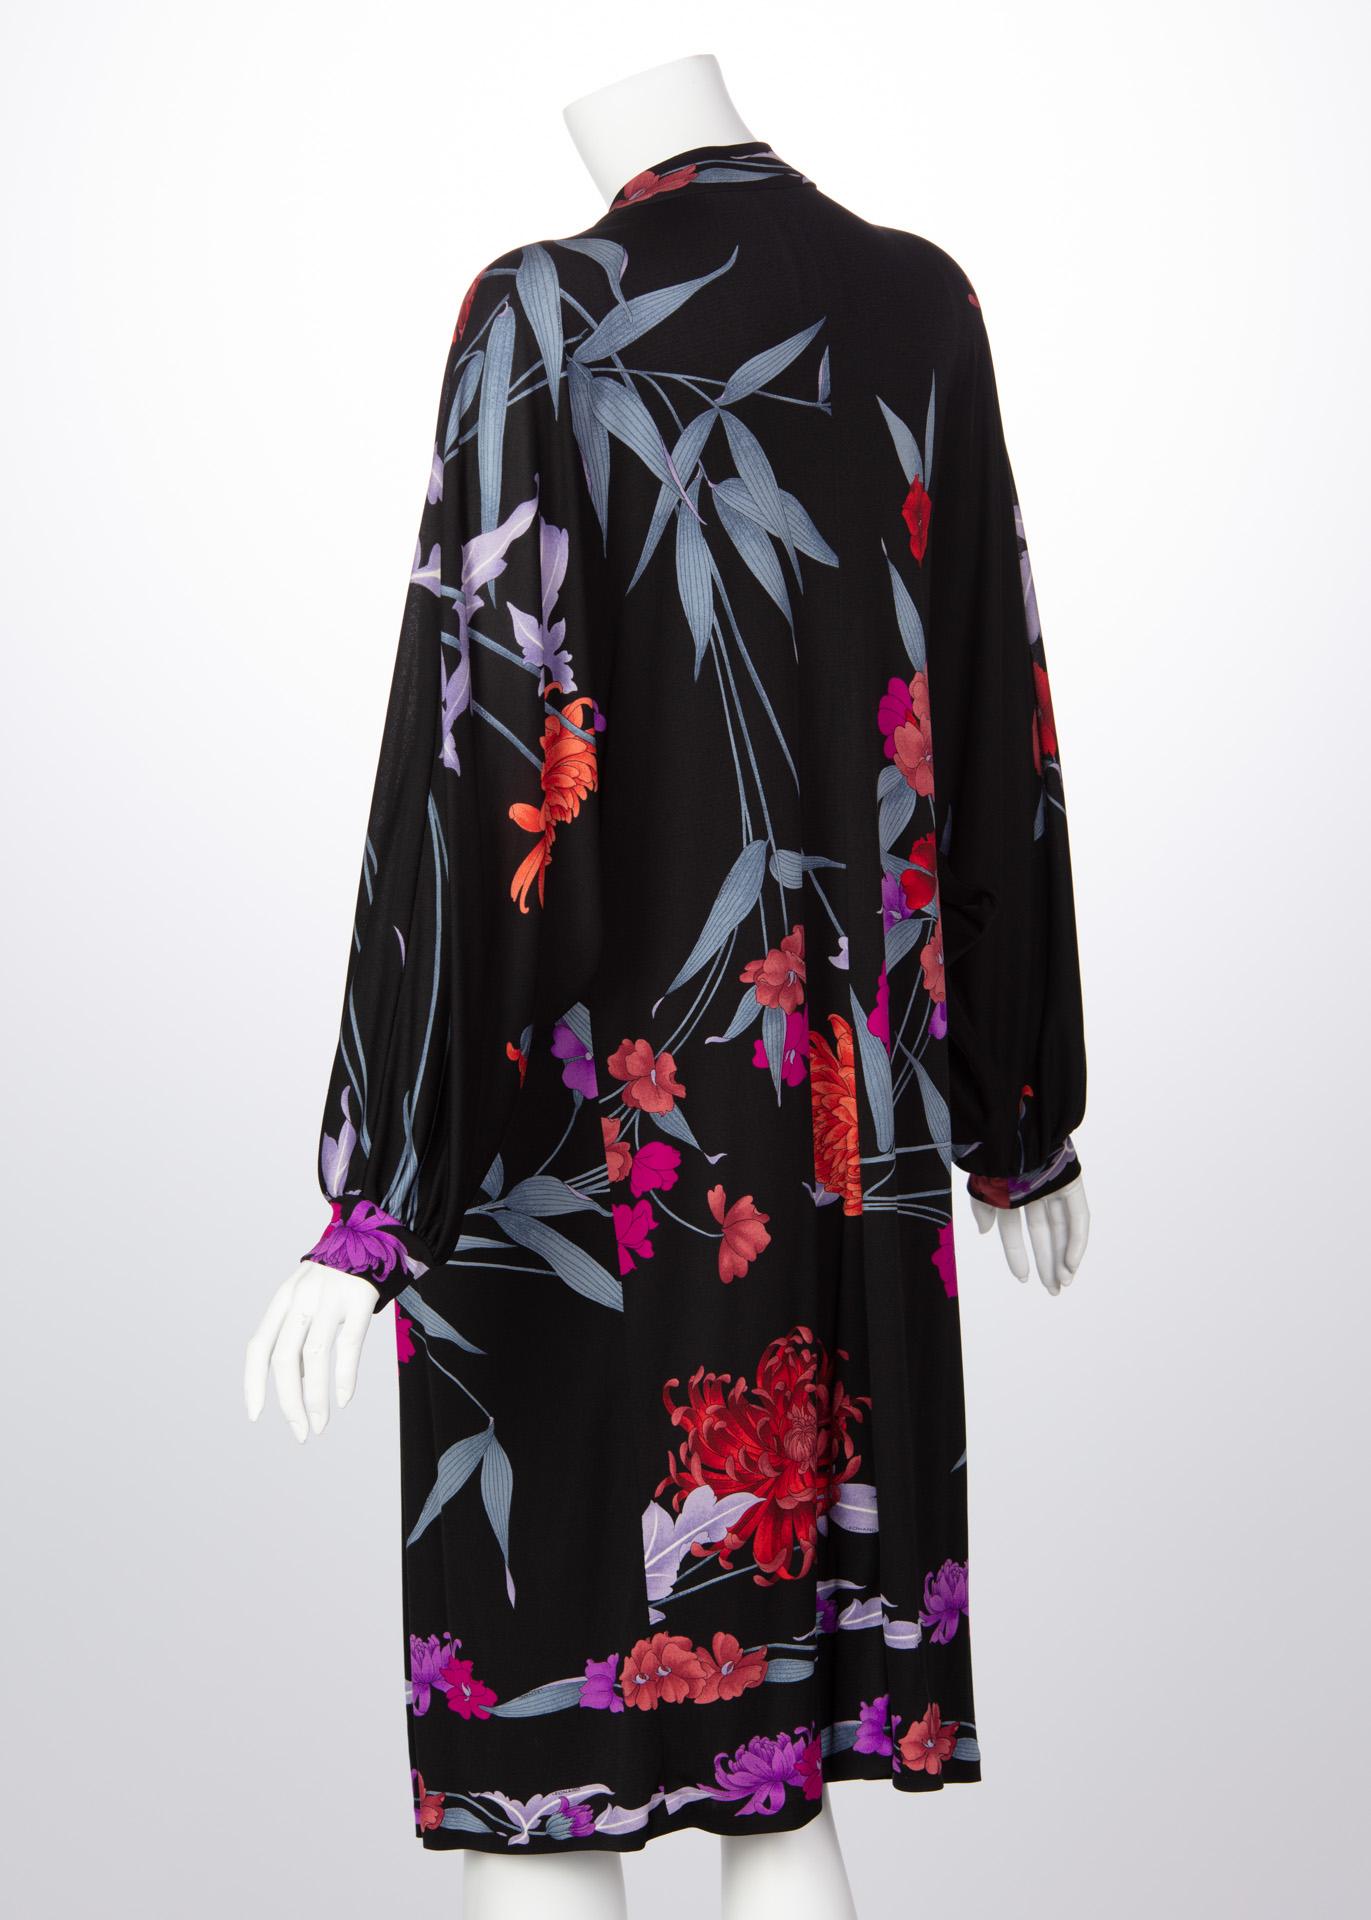 1970s Leonard Paris Floral Silk Jersey Dress Jacket 2